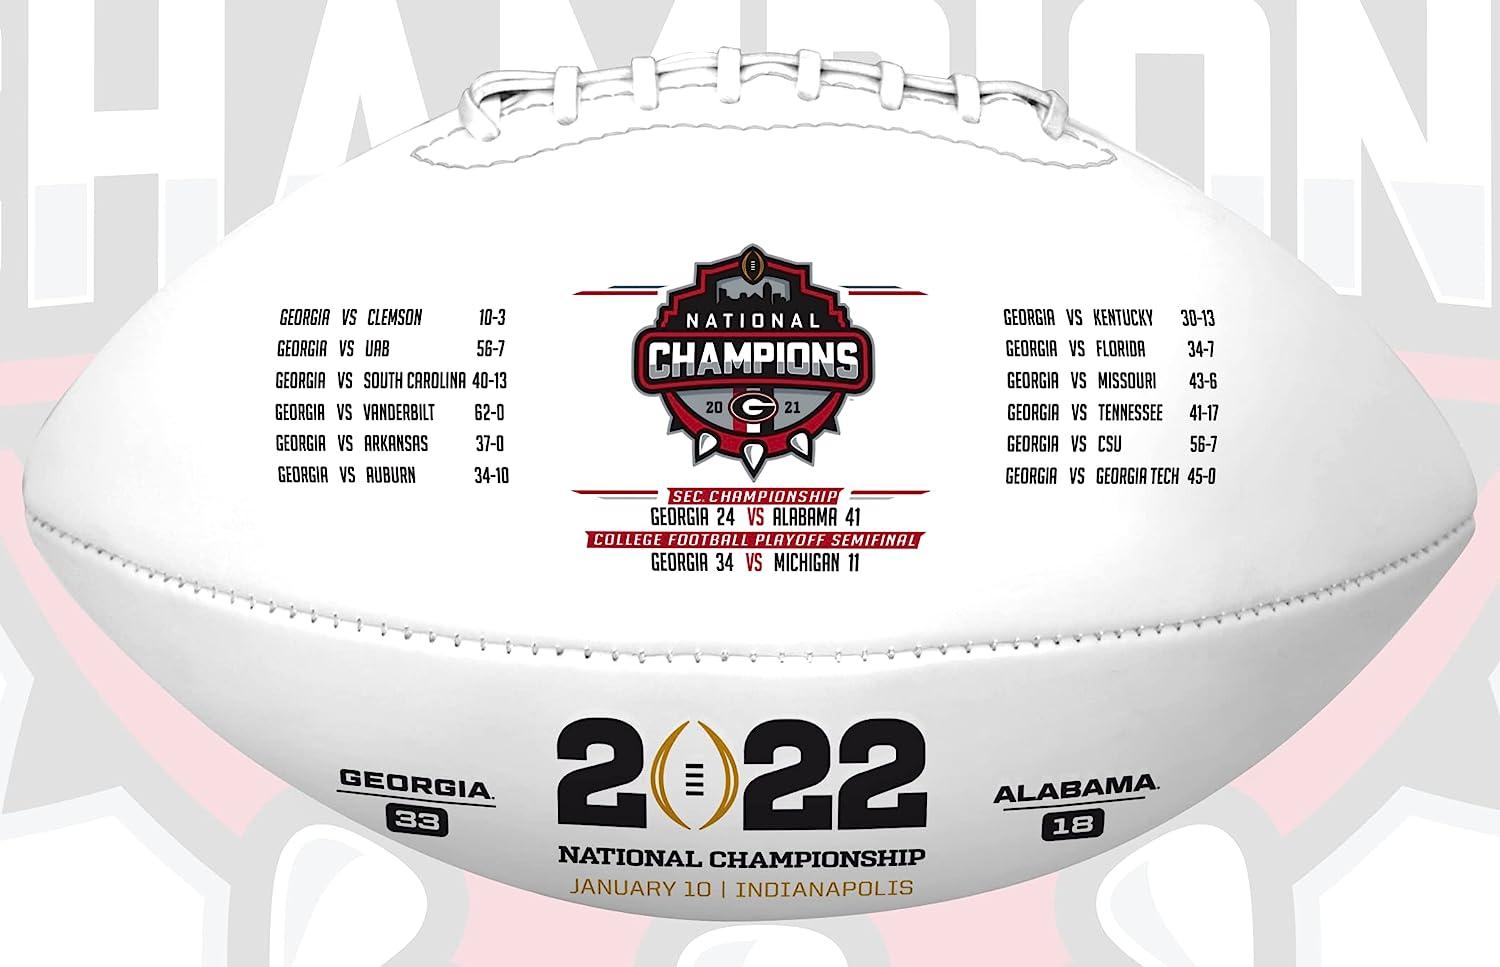 Rawlings 2022 oficial NCAA College Football National Championship